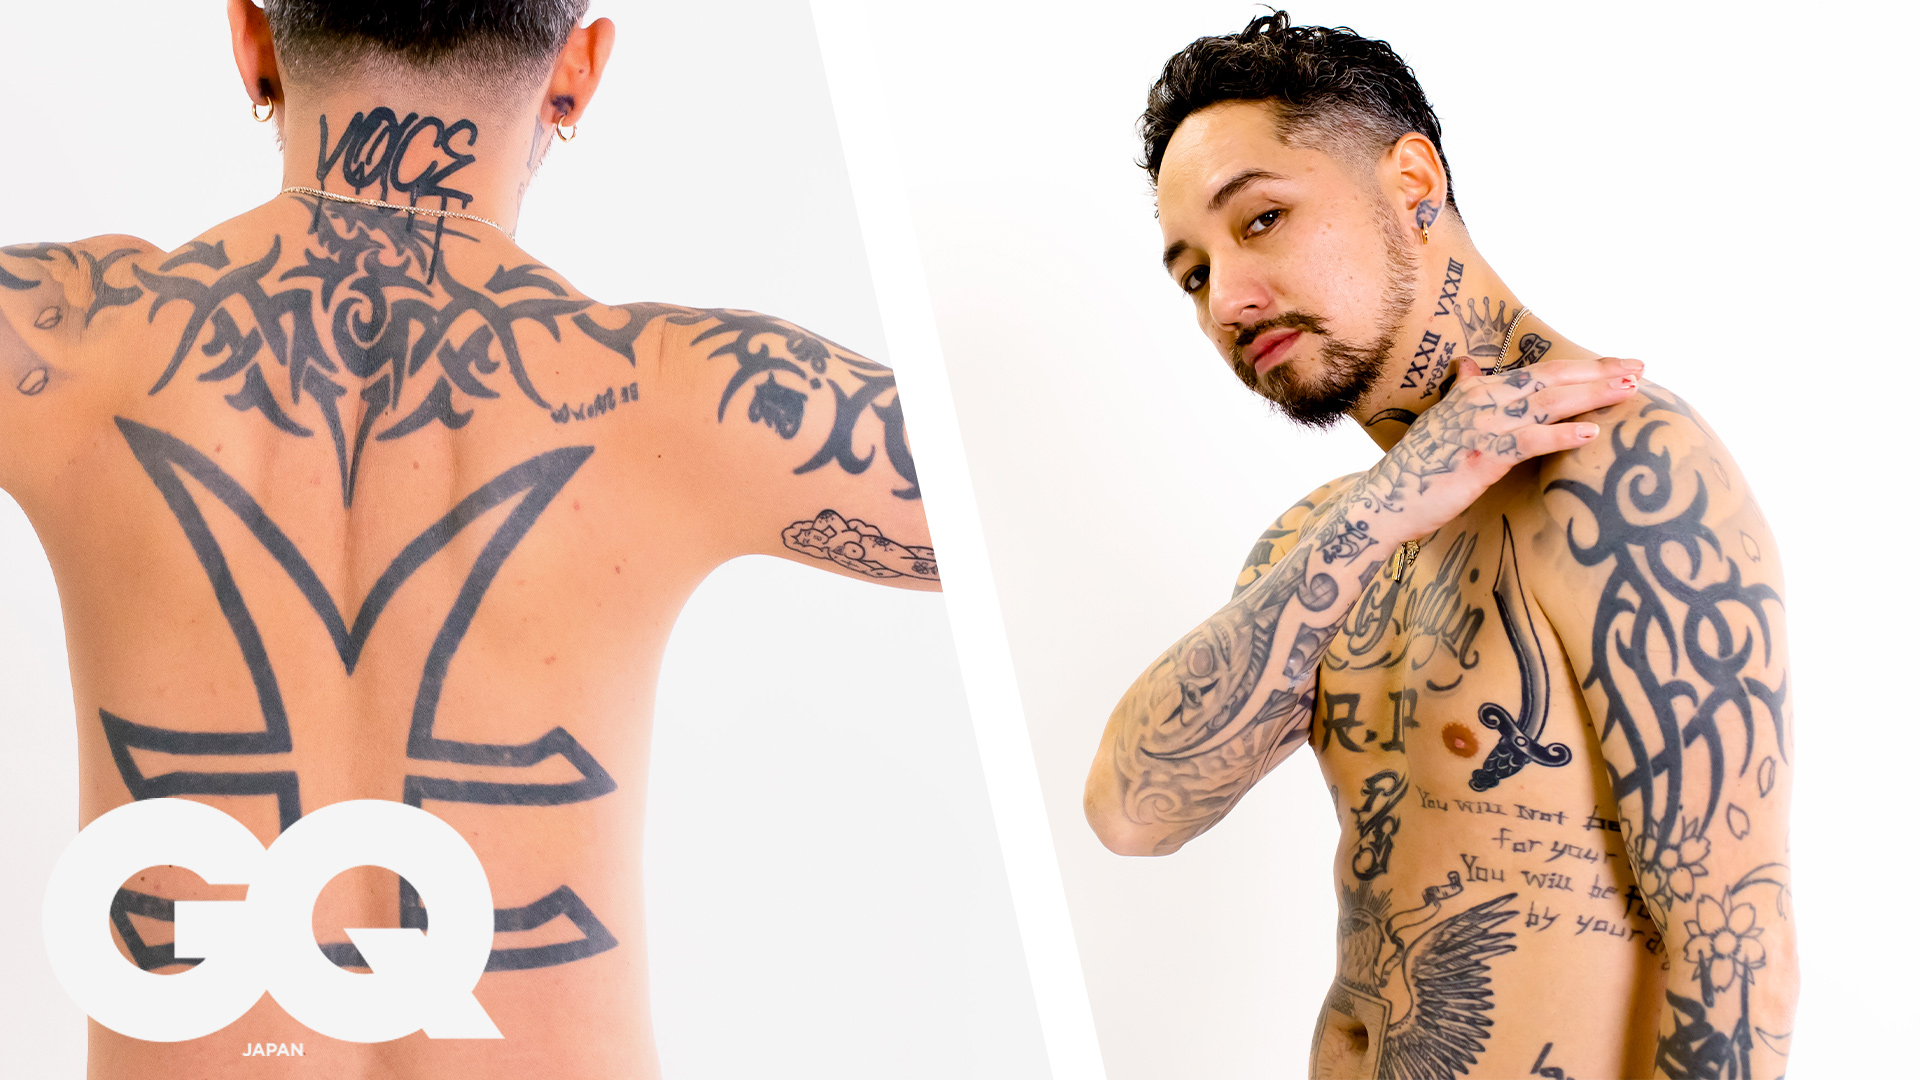 Watch Popular Tattoo Artist Reviews Celebrity Tattoos | GQ India